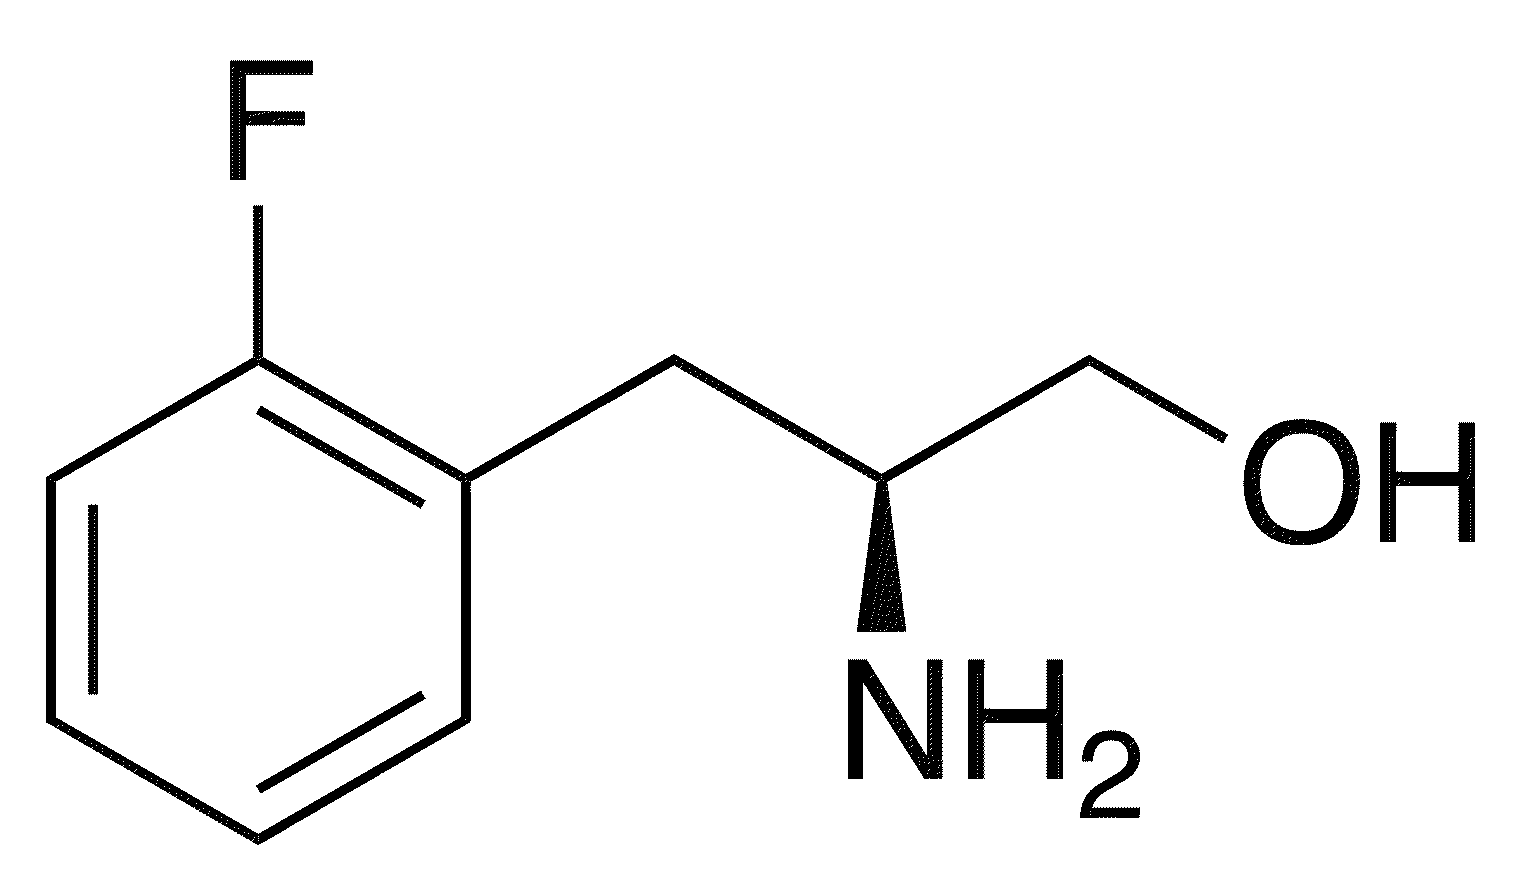 (2S)-2-Amino-3-(2-fluorophenyl)propan-1-ol